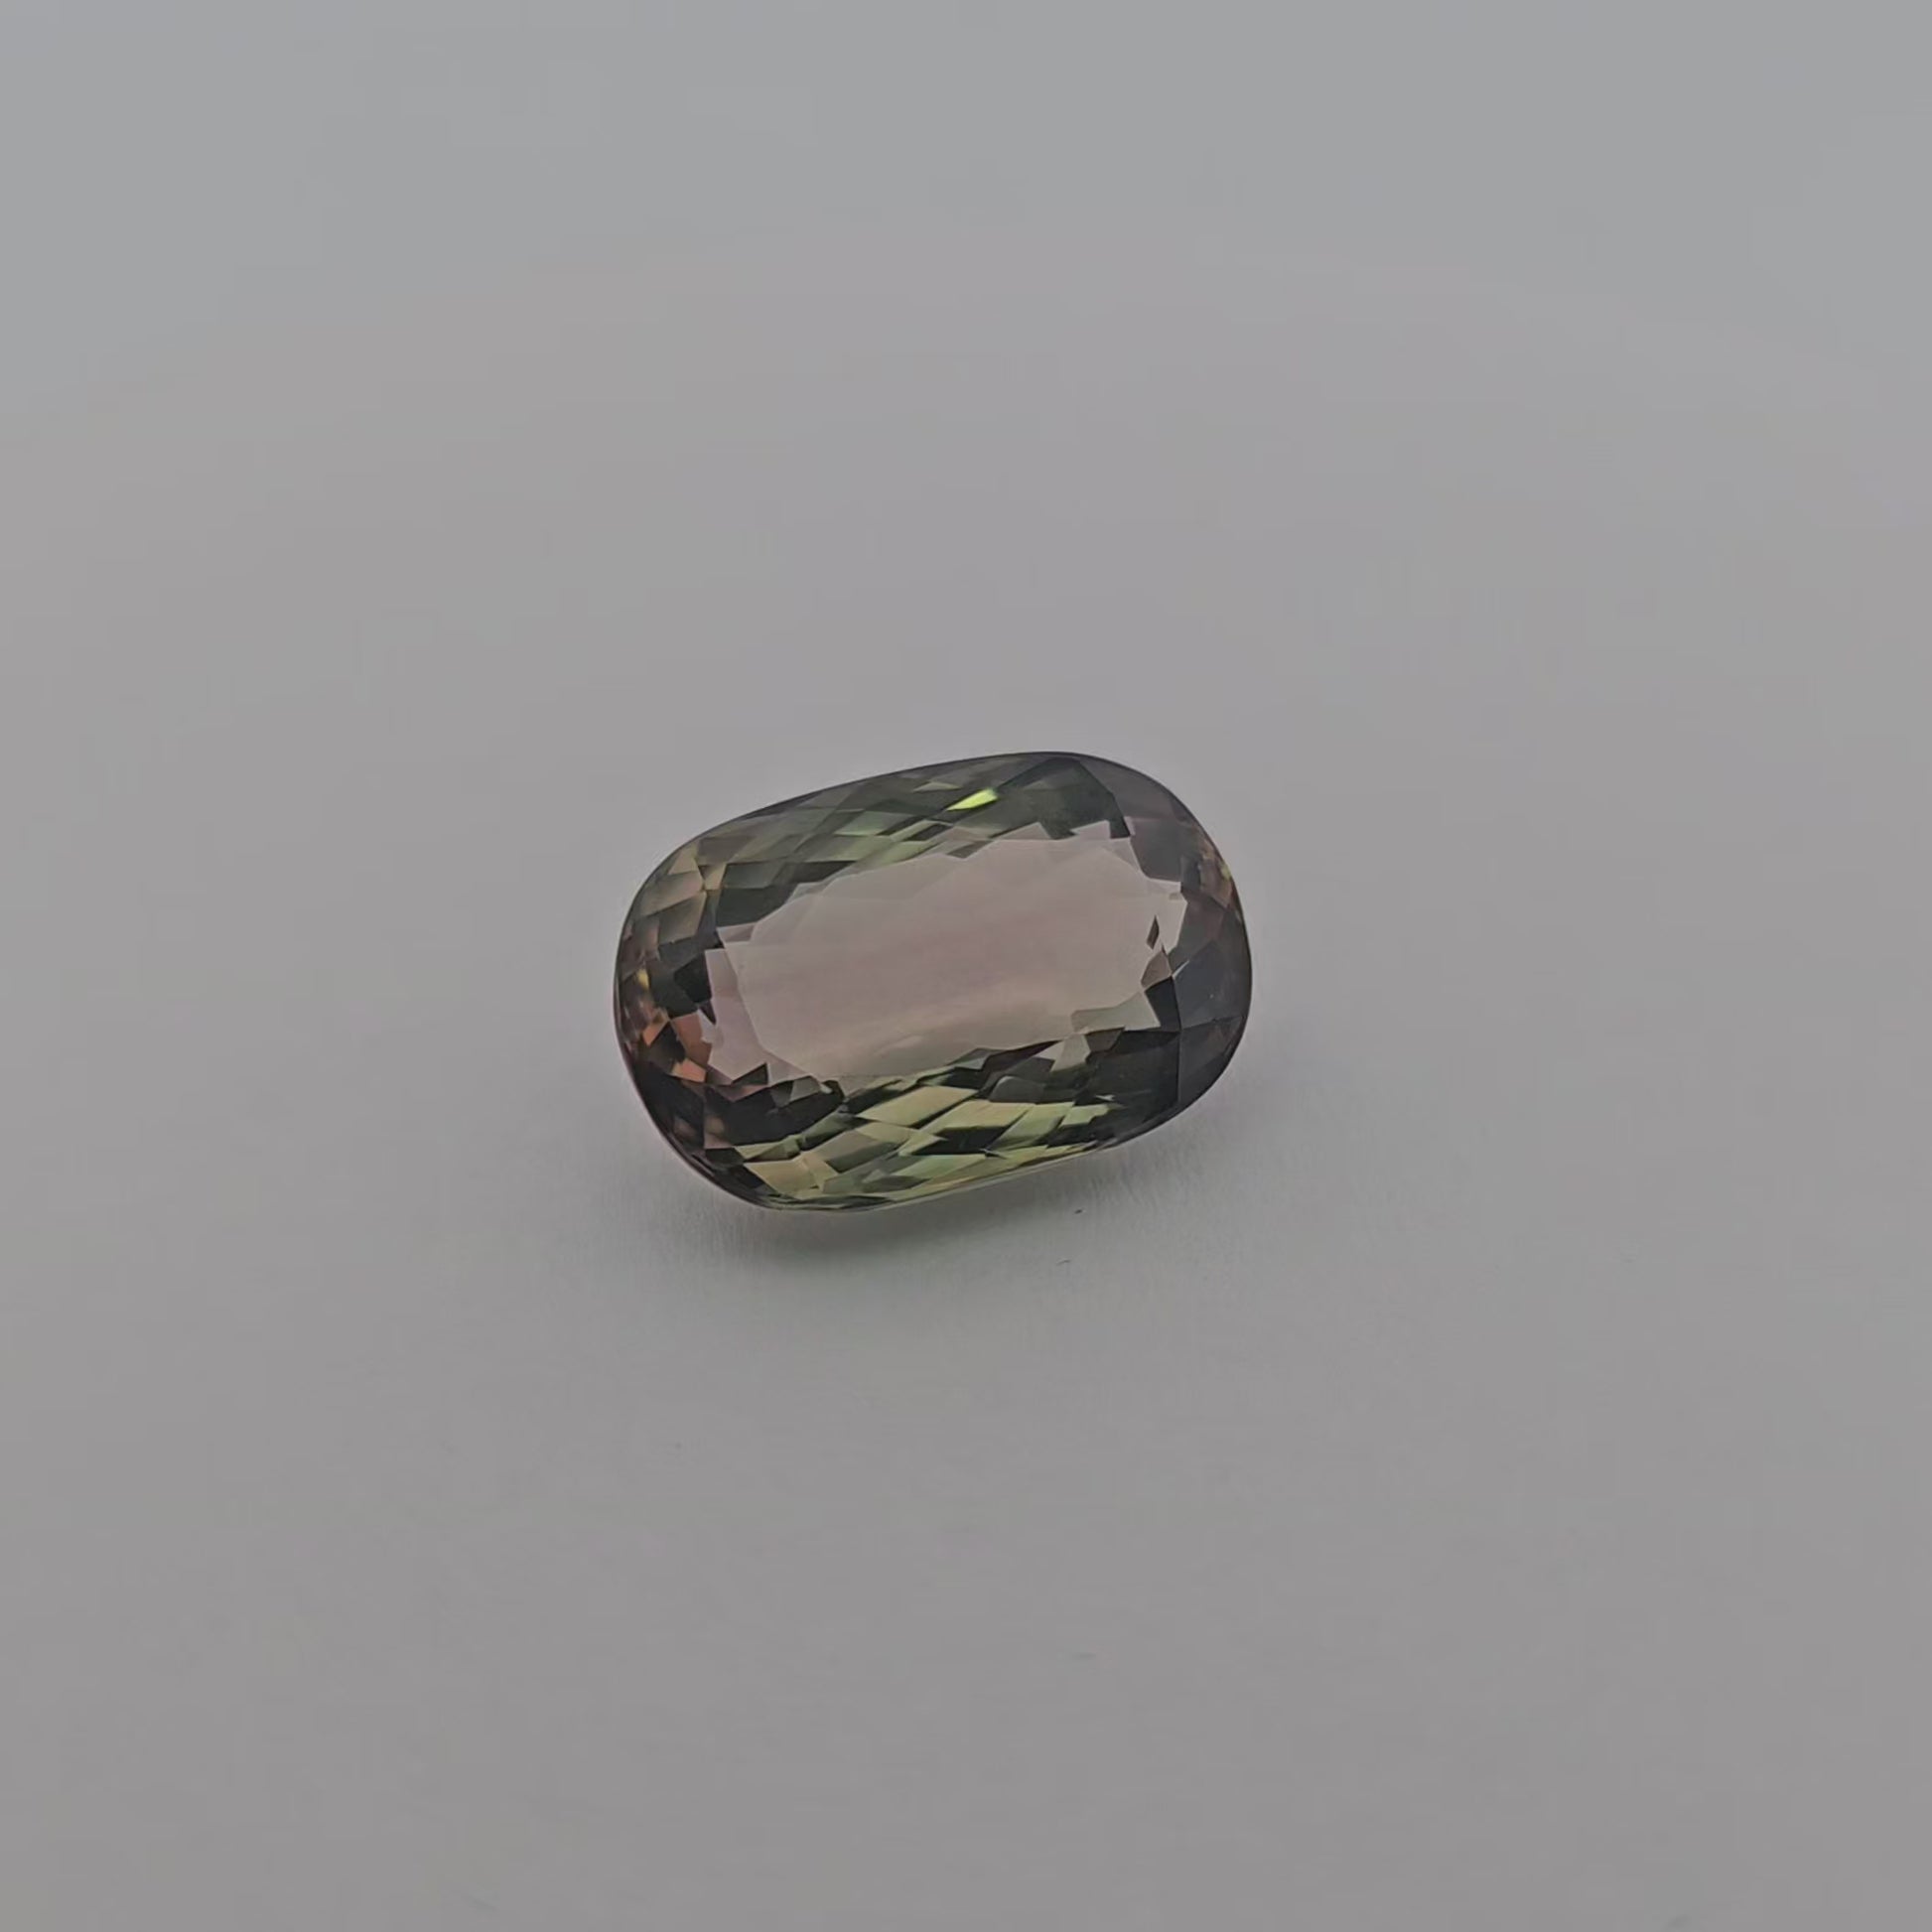  loose Natural Bi Color Tourmaline Stone 8.14 Carats Cushion Cut (15 x 10 mm)